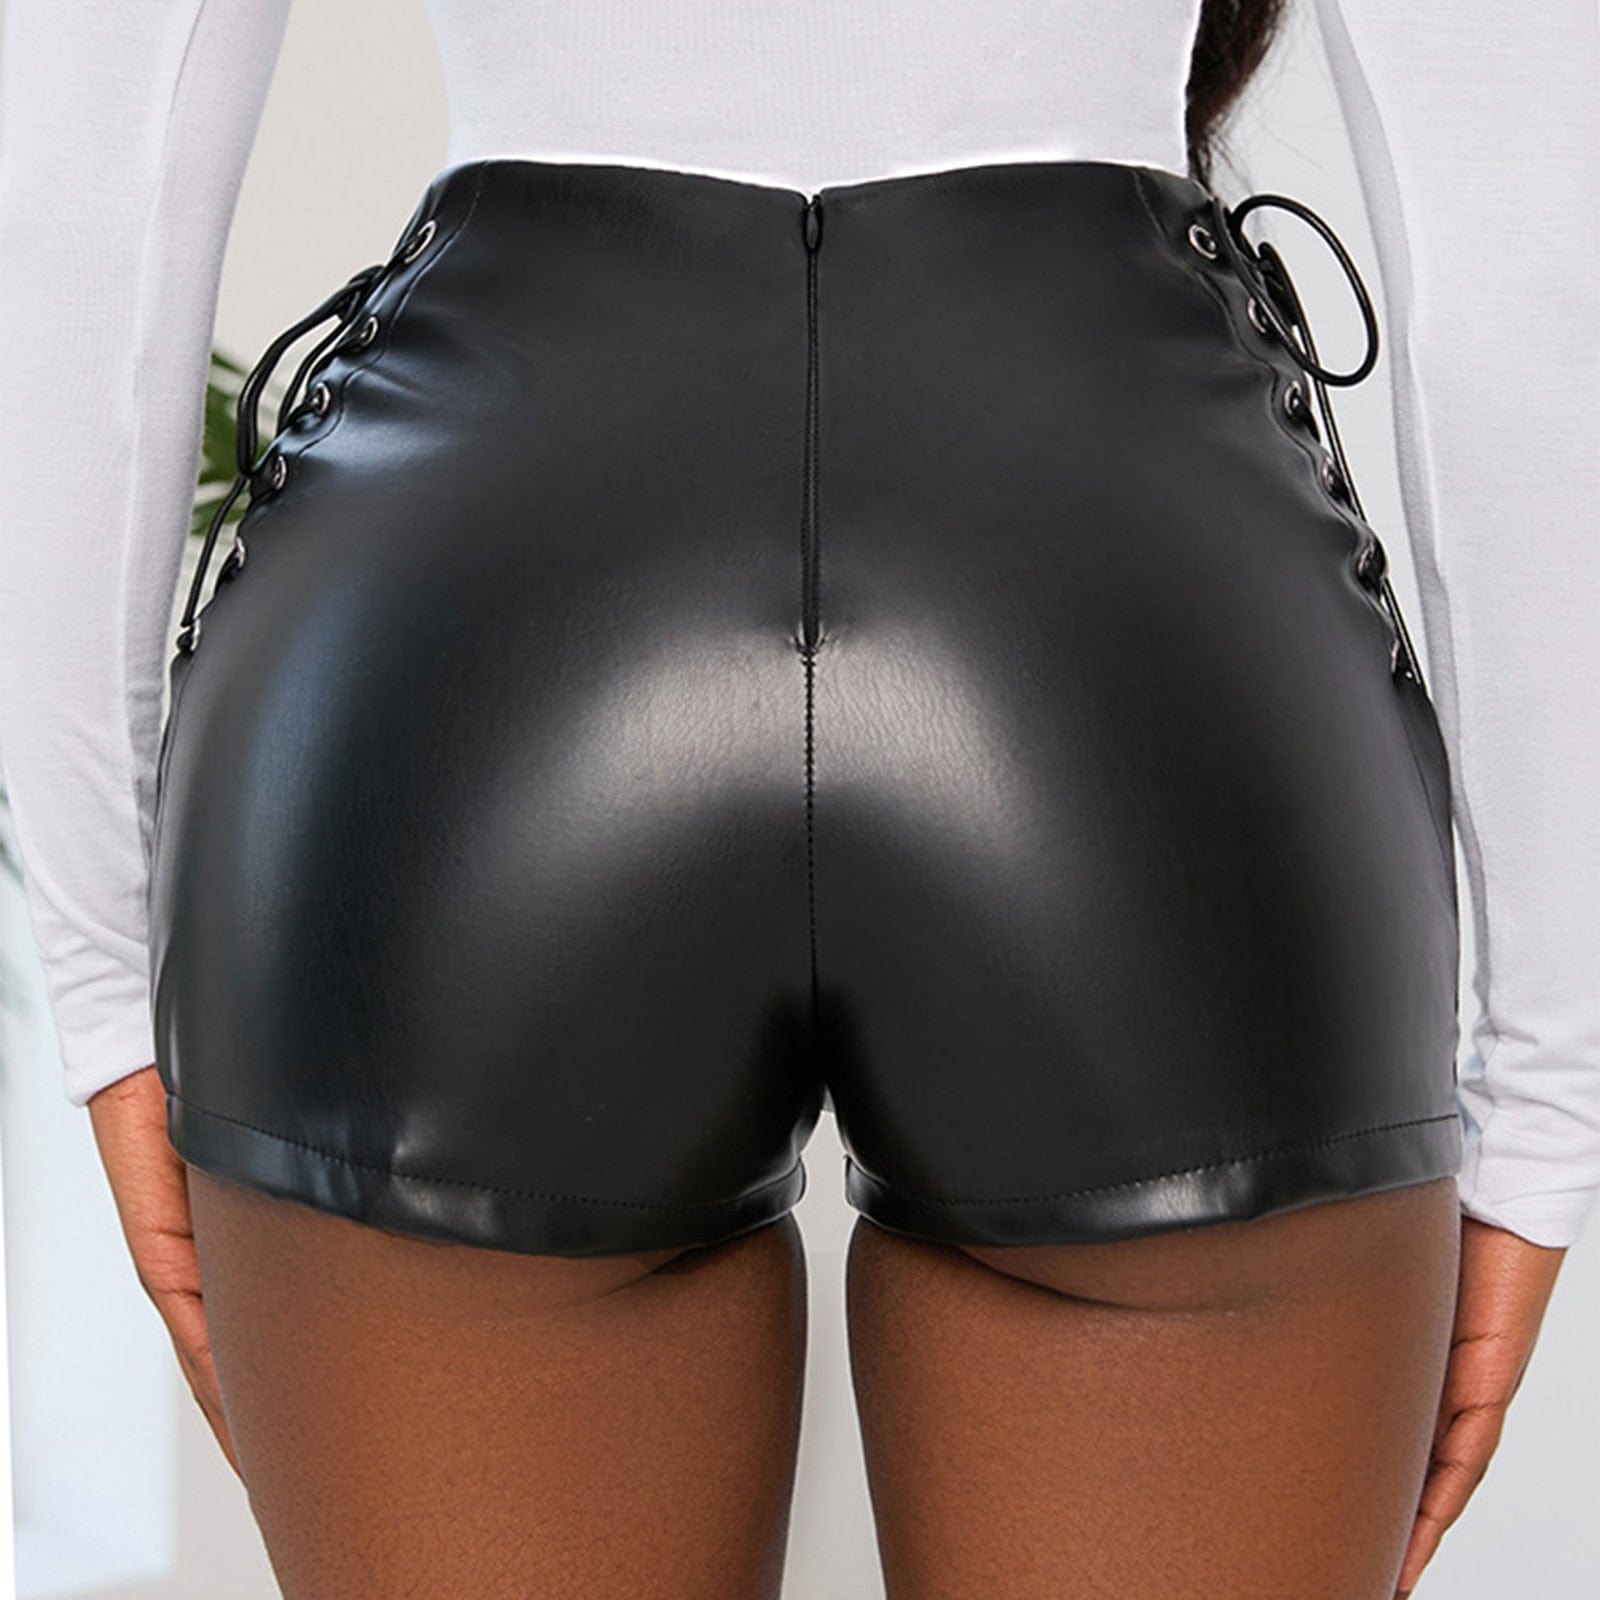 Kinky Cloth PU Leather Sides Lace-Up Shorts